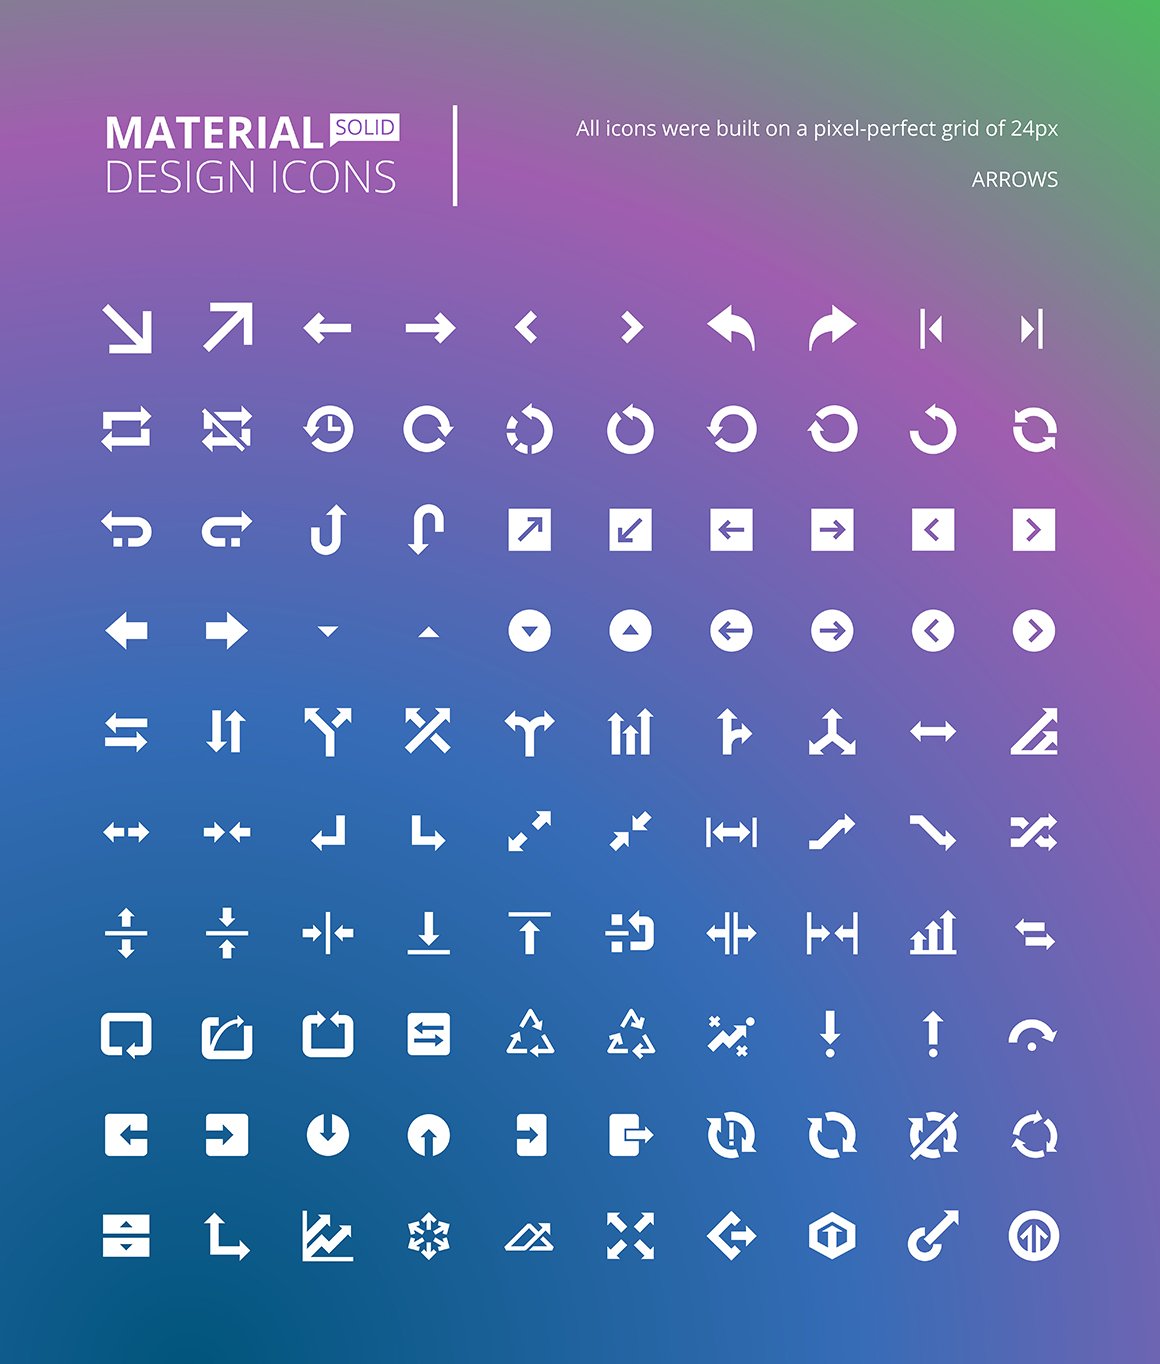 800 Material Design Icons